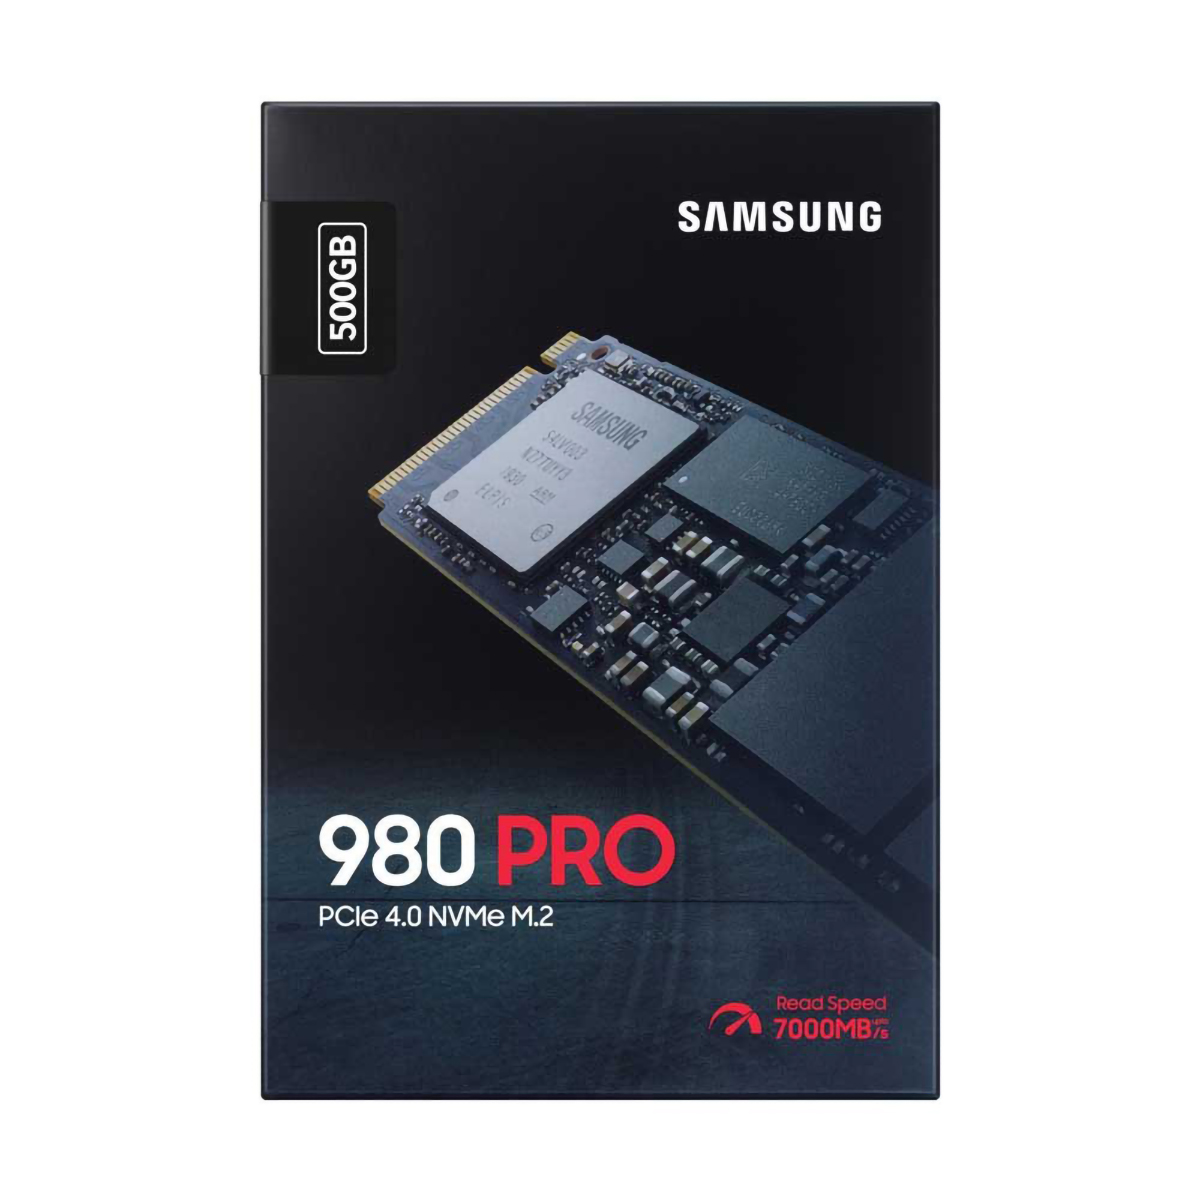 Samsung 980 Pro PCIe 4.0 NVMe 500GB SSD Box